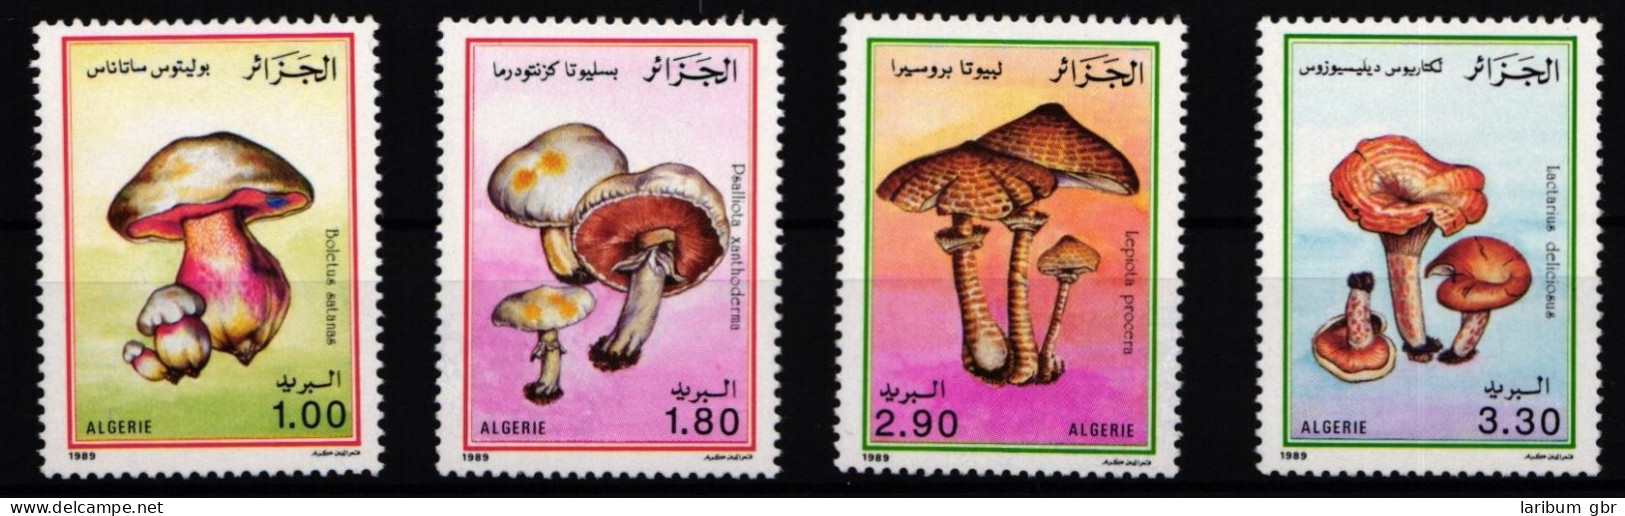 Algerien 1010-1013 Postfrisch Pilze #JA185 - Argelia (1962-...)